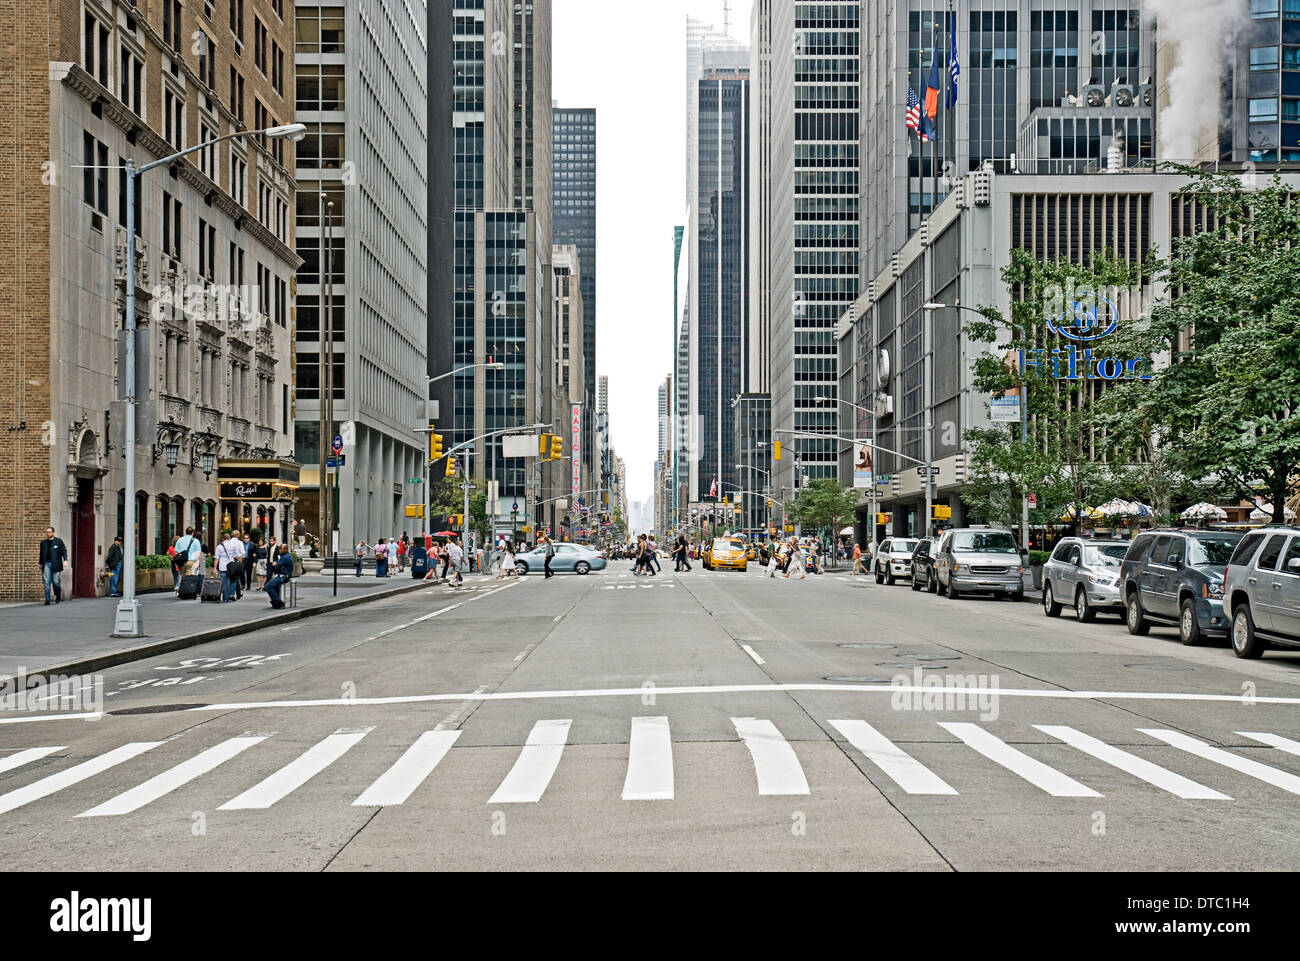 Empty urban street scene on Avenue of the Americas in New York City. Stock Photo